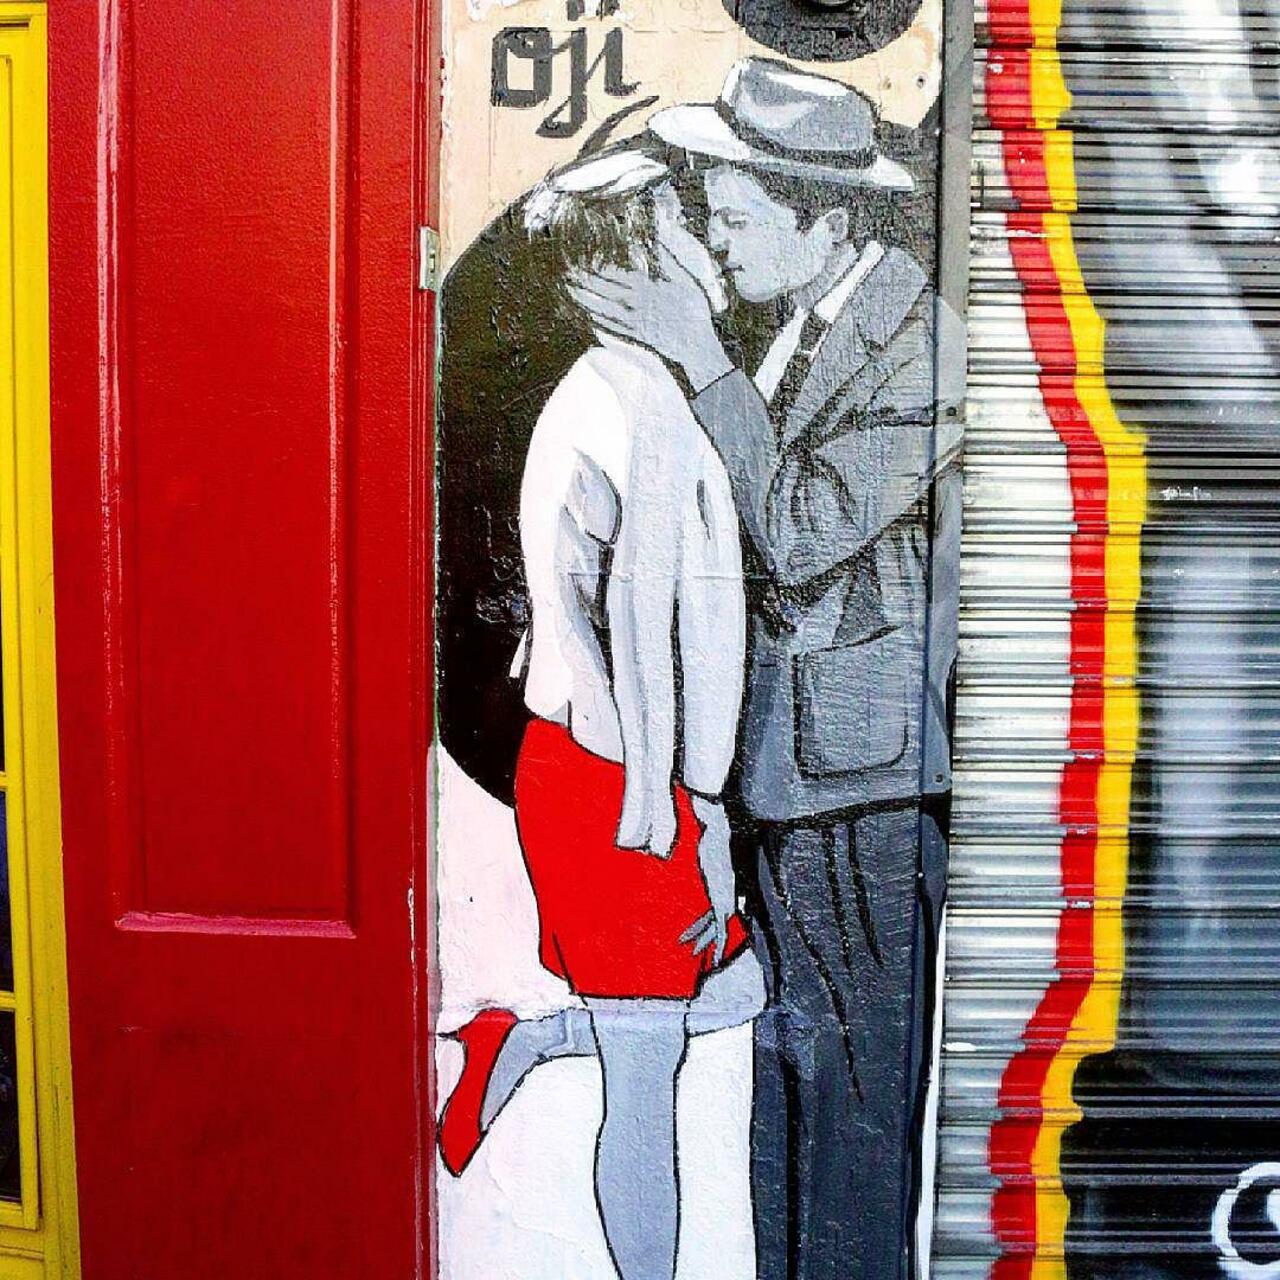 RT @circumjacent_fr: #Paris #graffiti photo by @jpoesse http://ift.tt/1hH5hJx #StreetArt http://t.co/lxUxki70tY